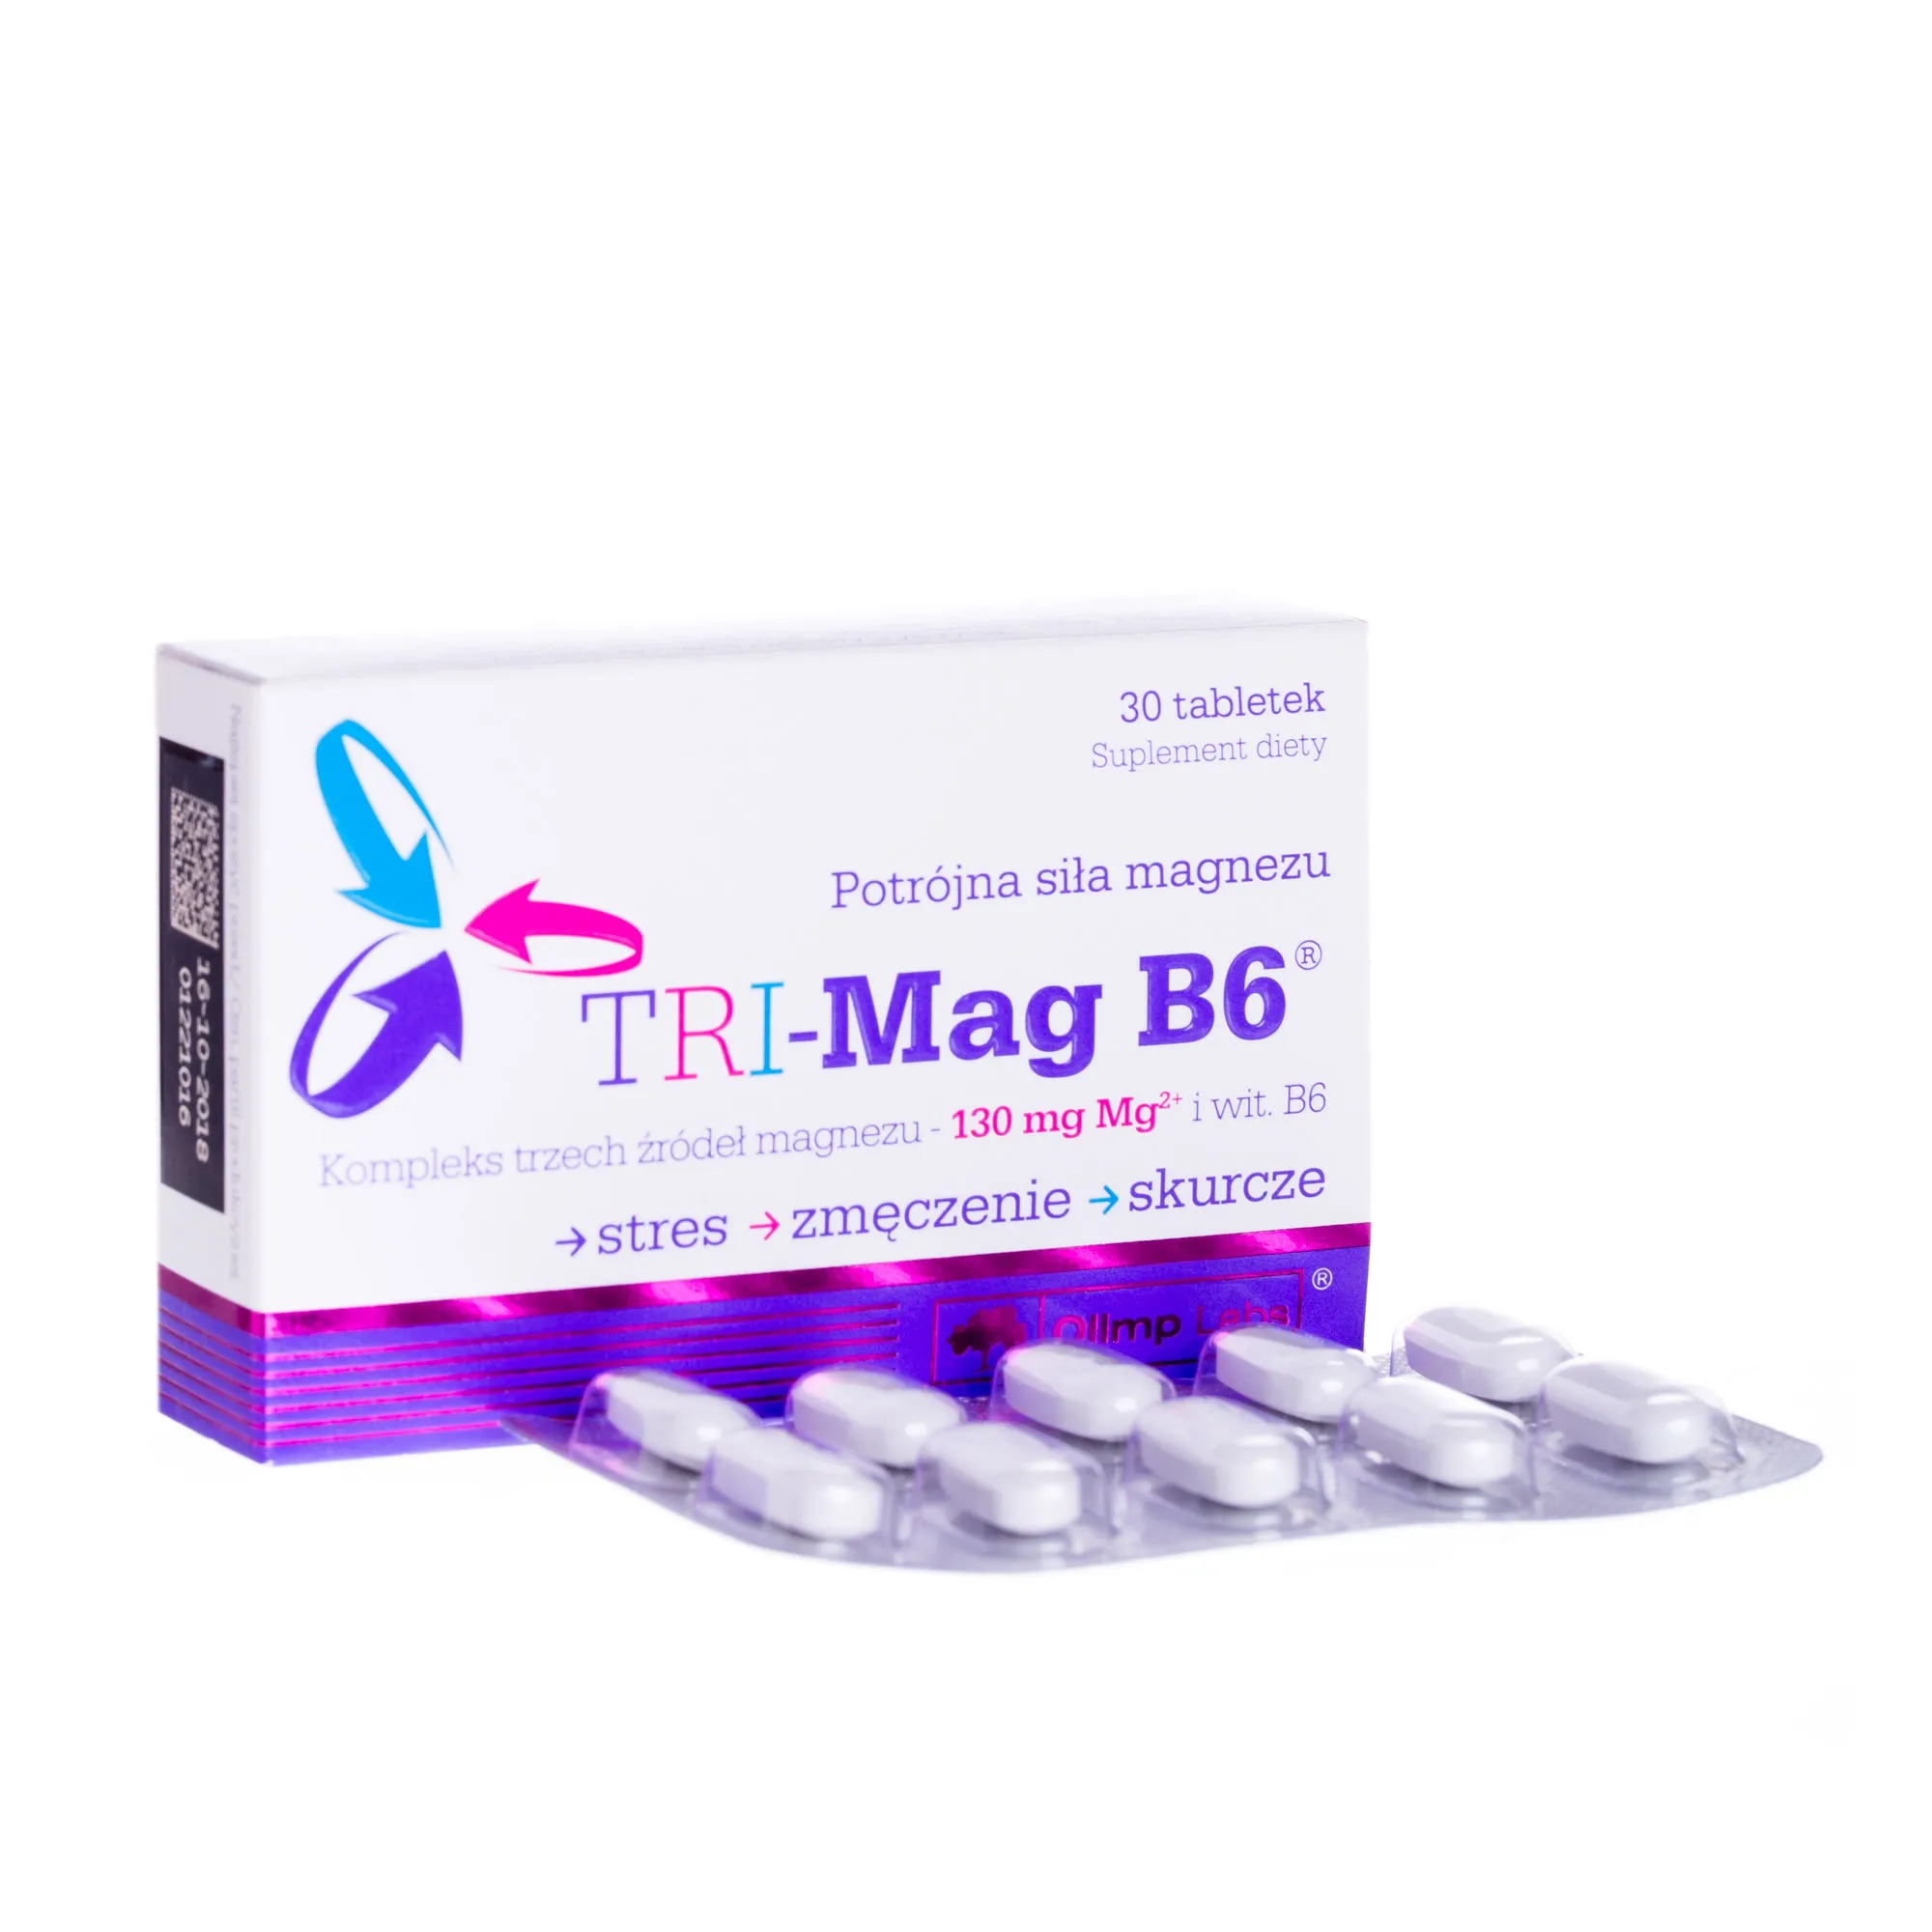 Olimp Tri-Mag B6, suplement diety, 30 tabletek